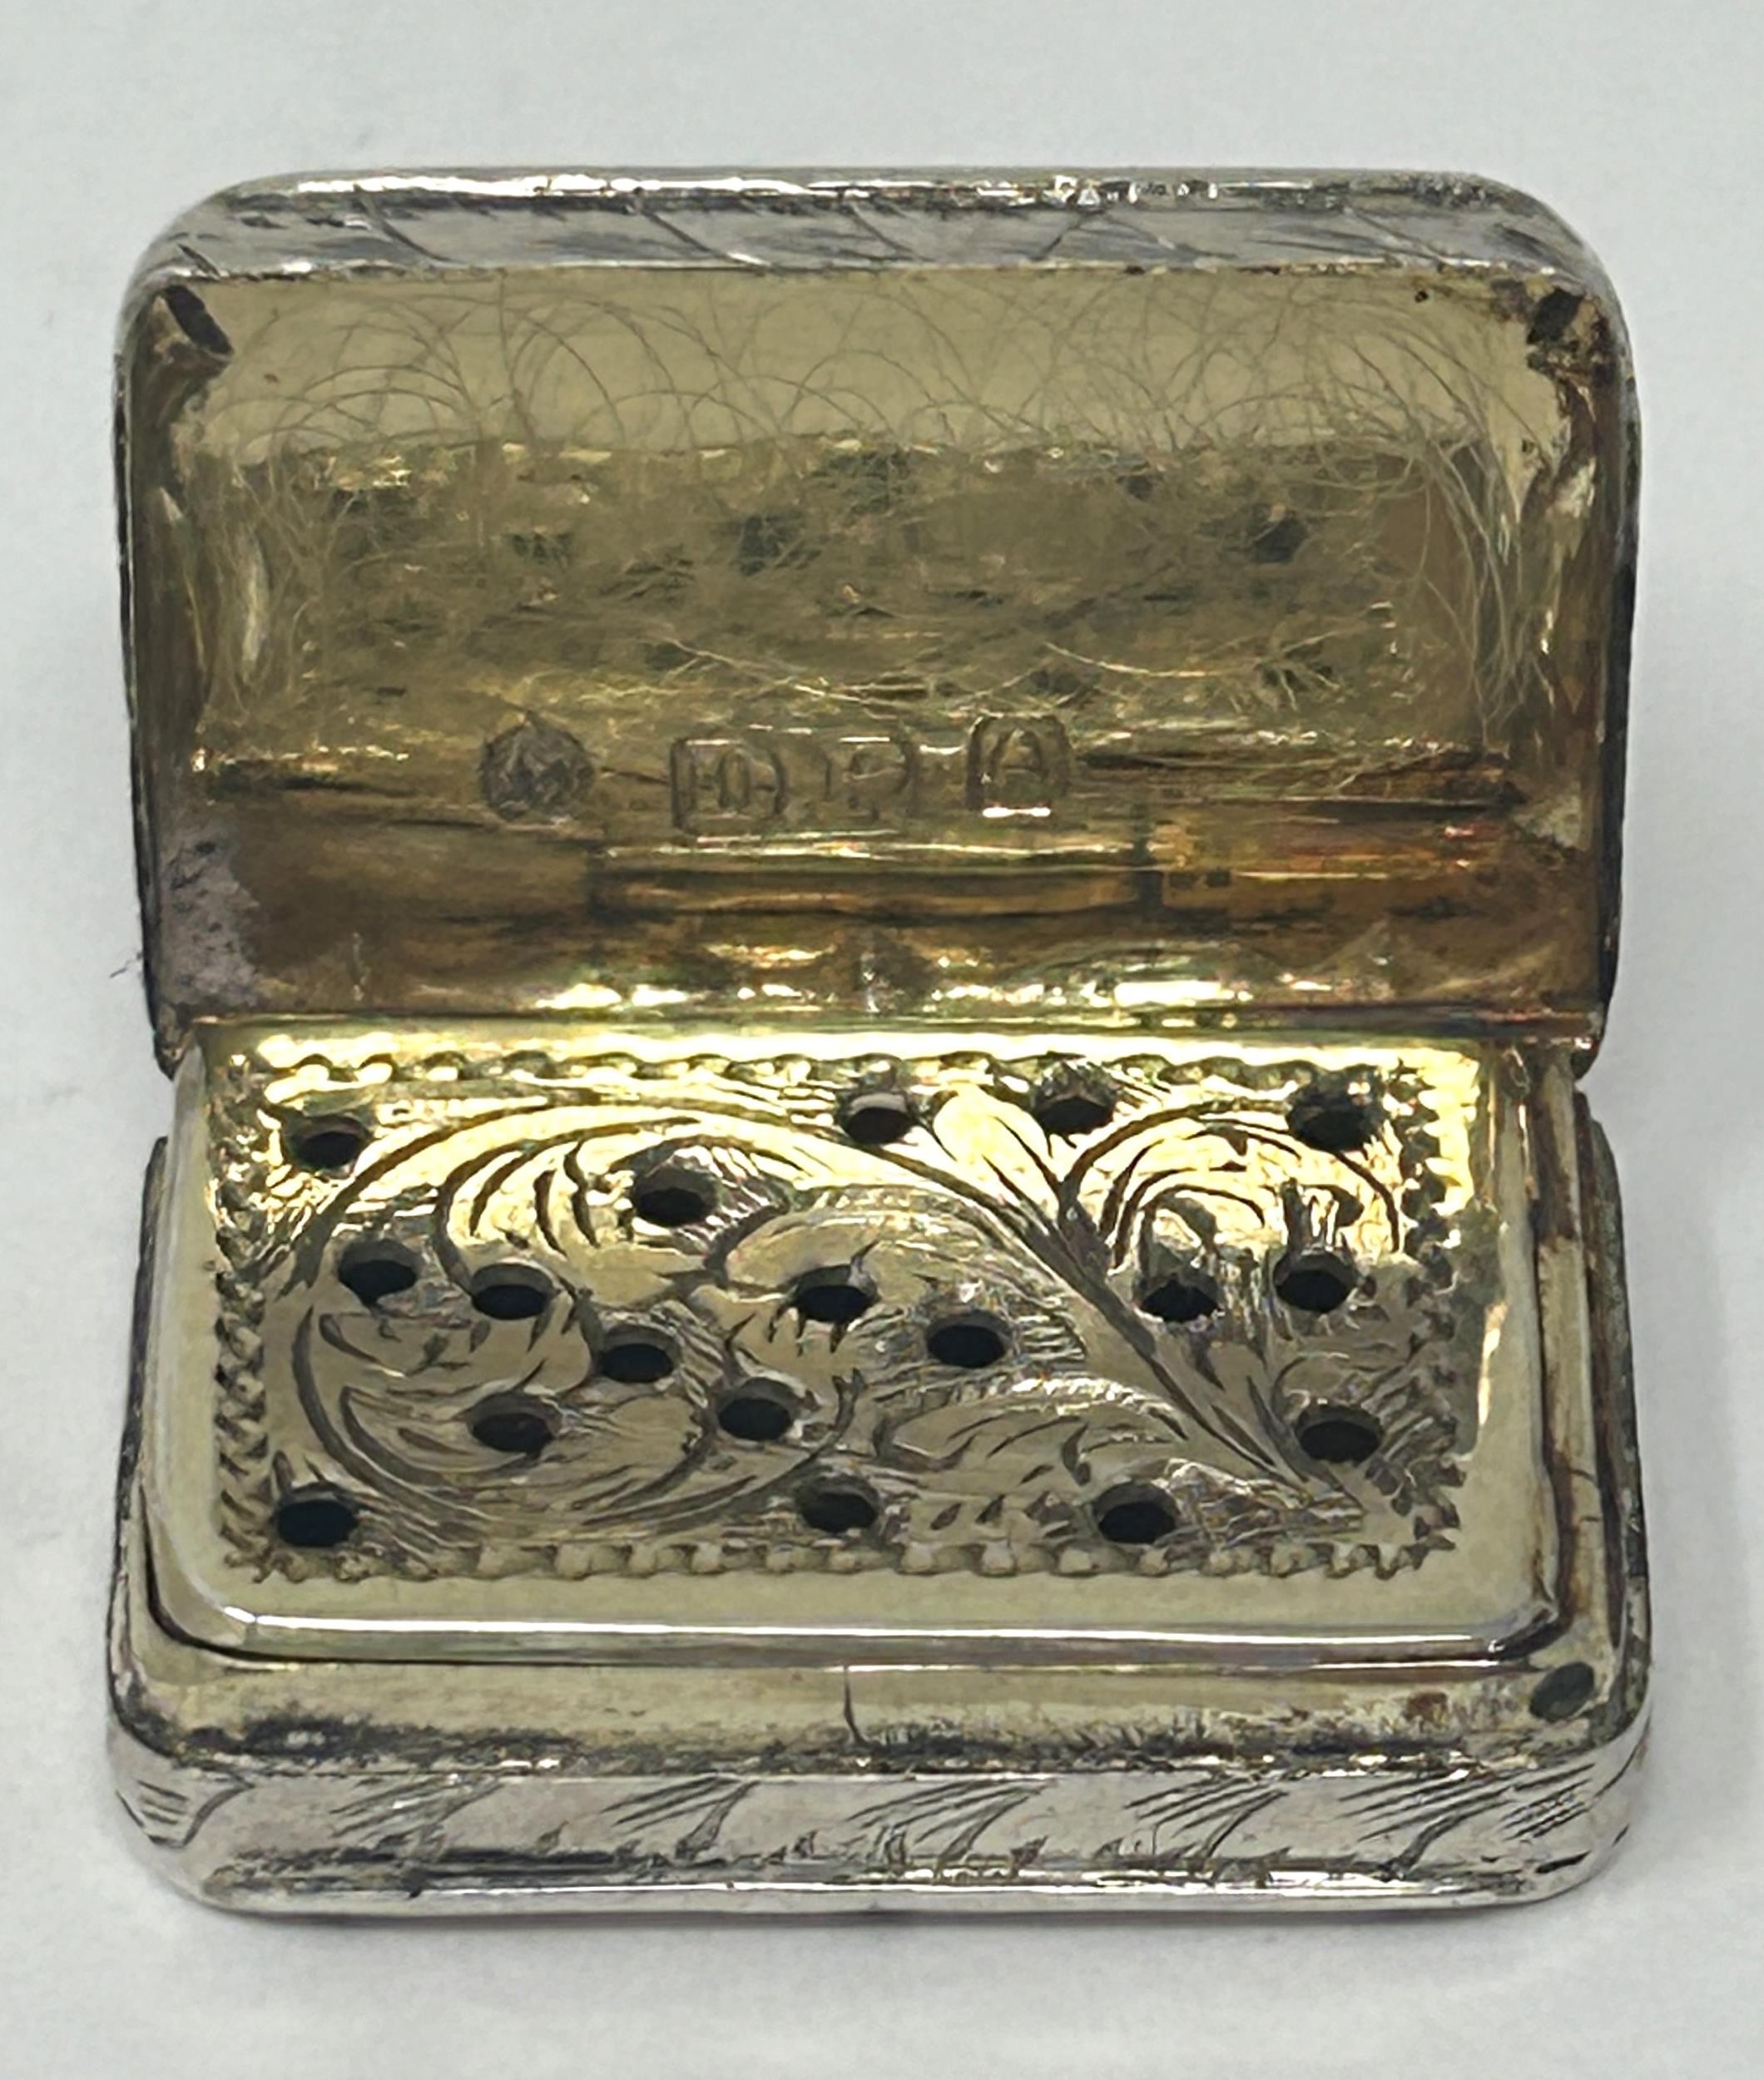 A 19th century silver vinaigrette, 6.2 g - Image 2 of 4